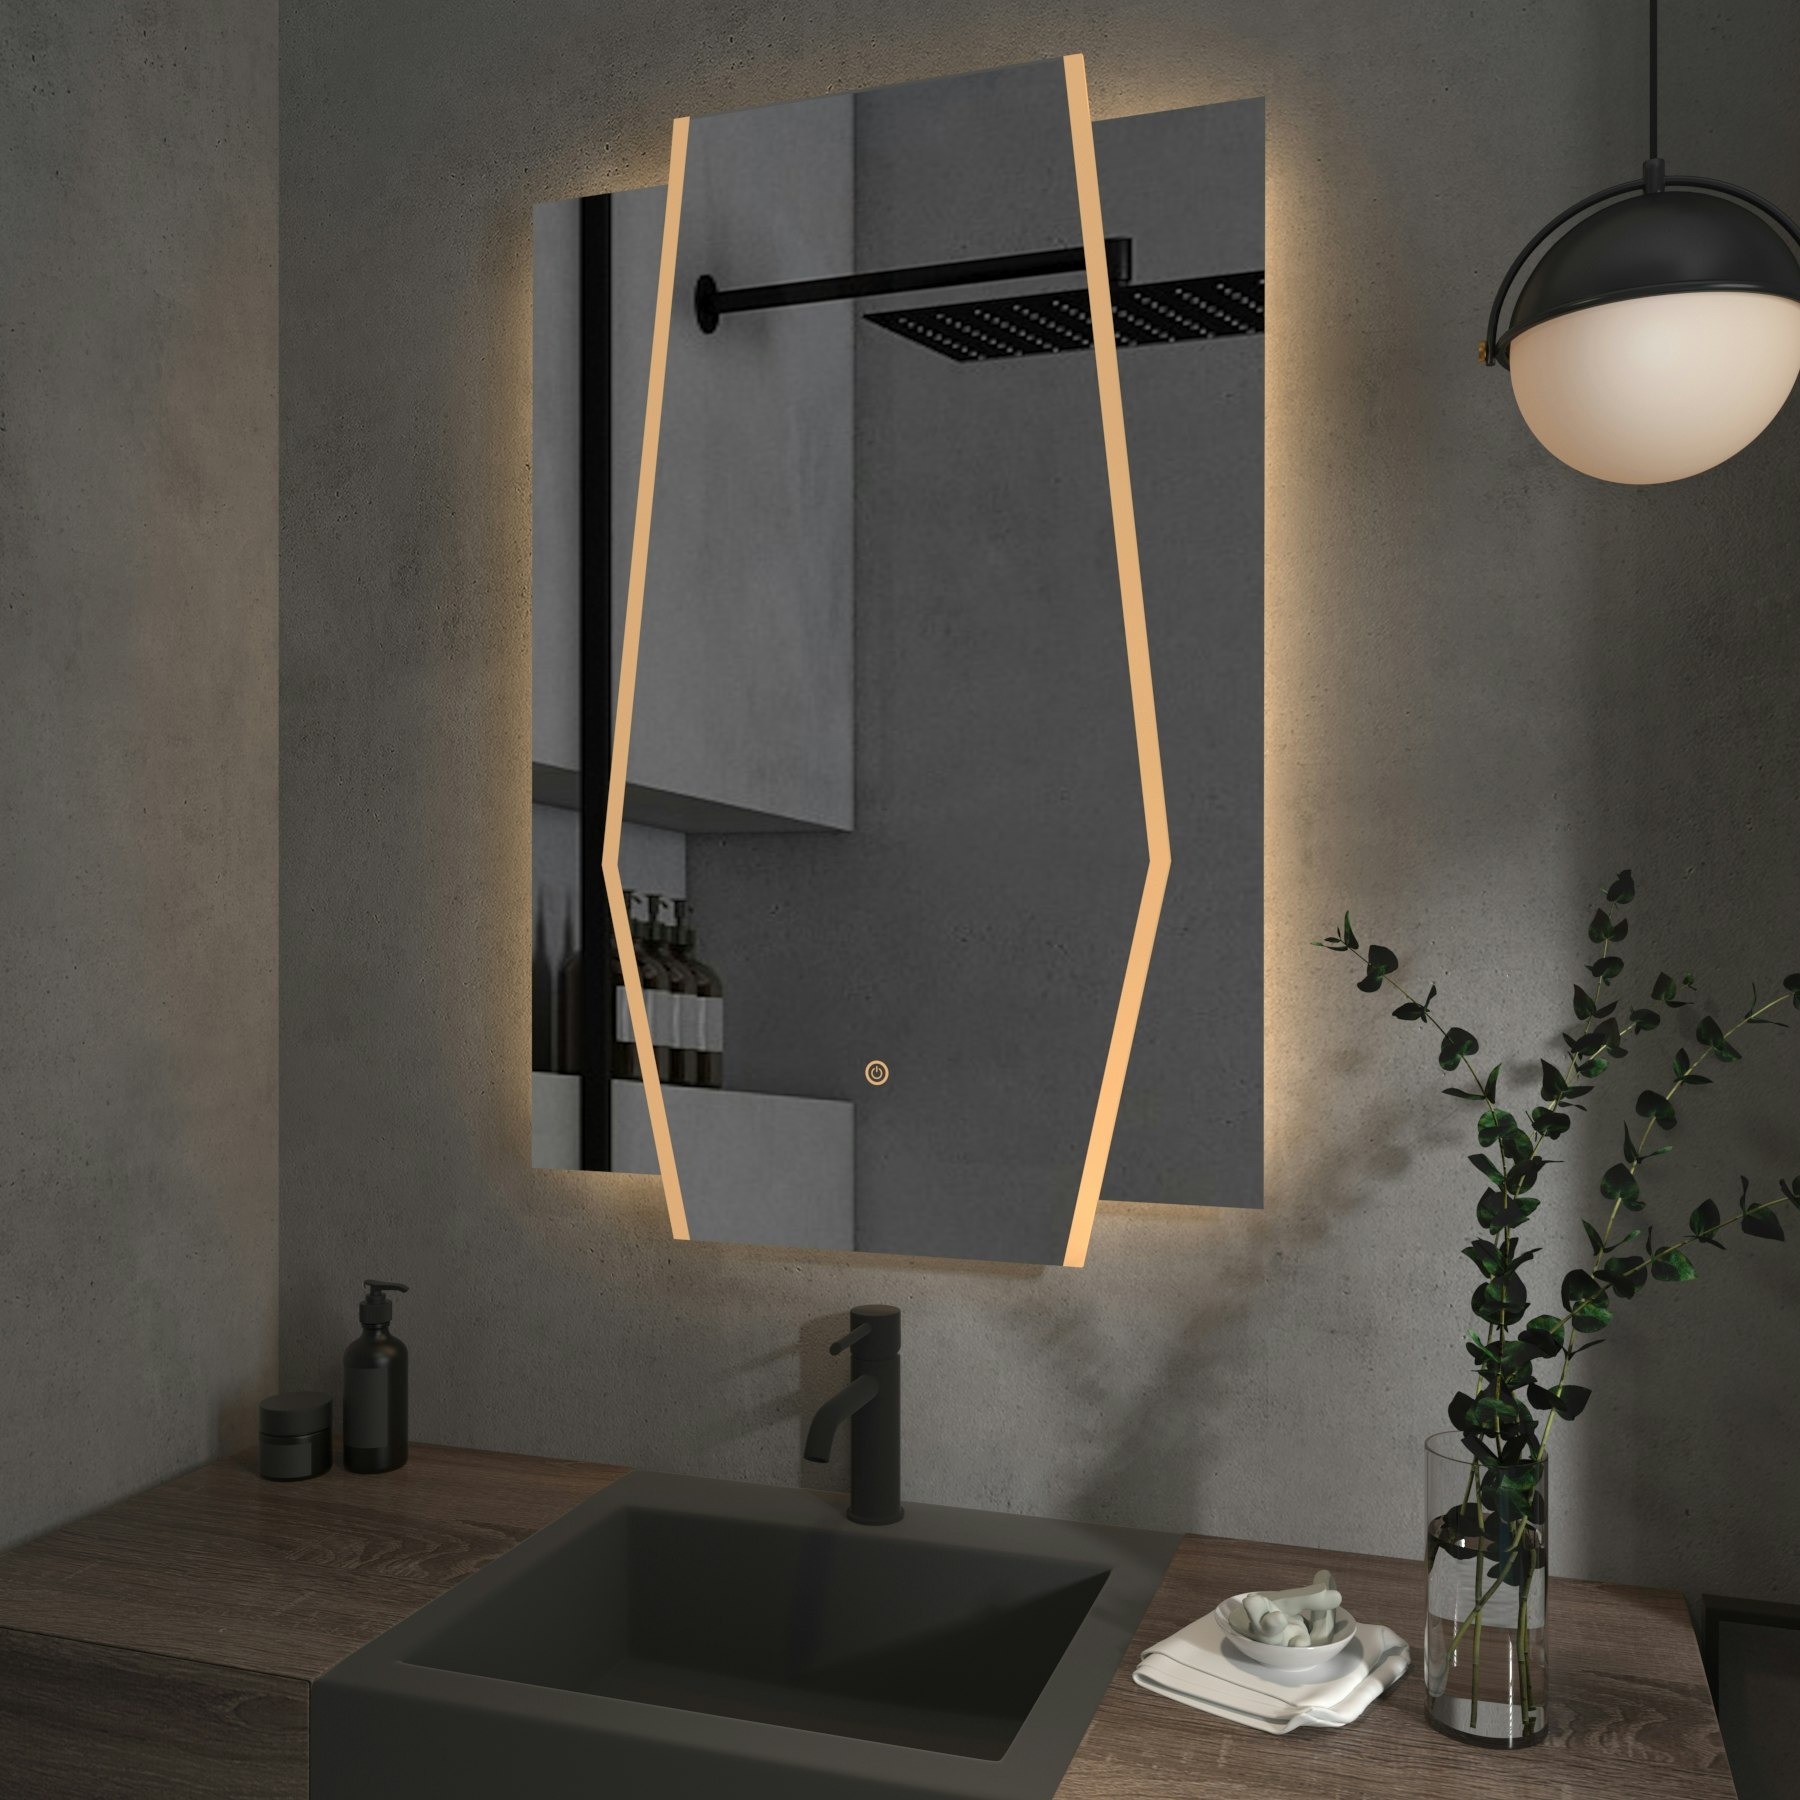 Celesta 600 x 900mm Three Panels Designer LED Illuminated Bathroom Mirror - Anti-Fog